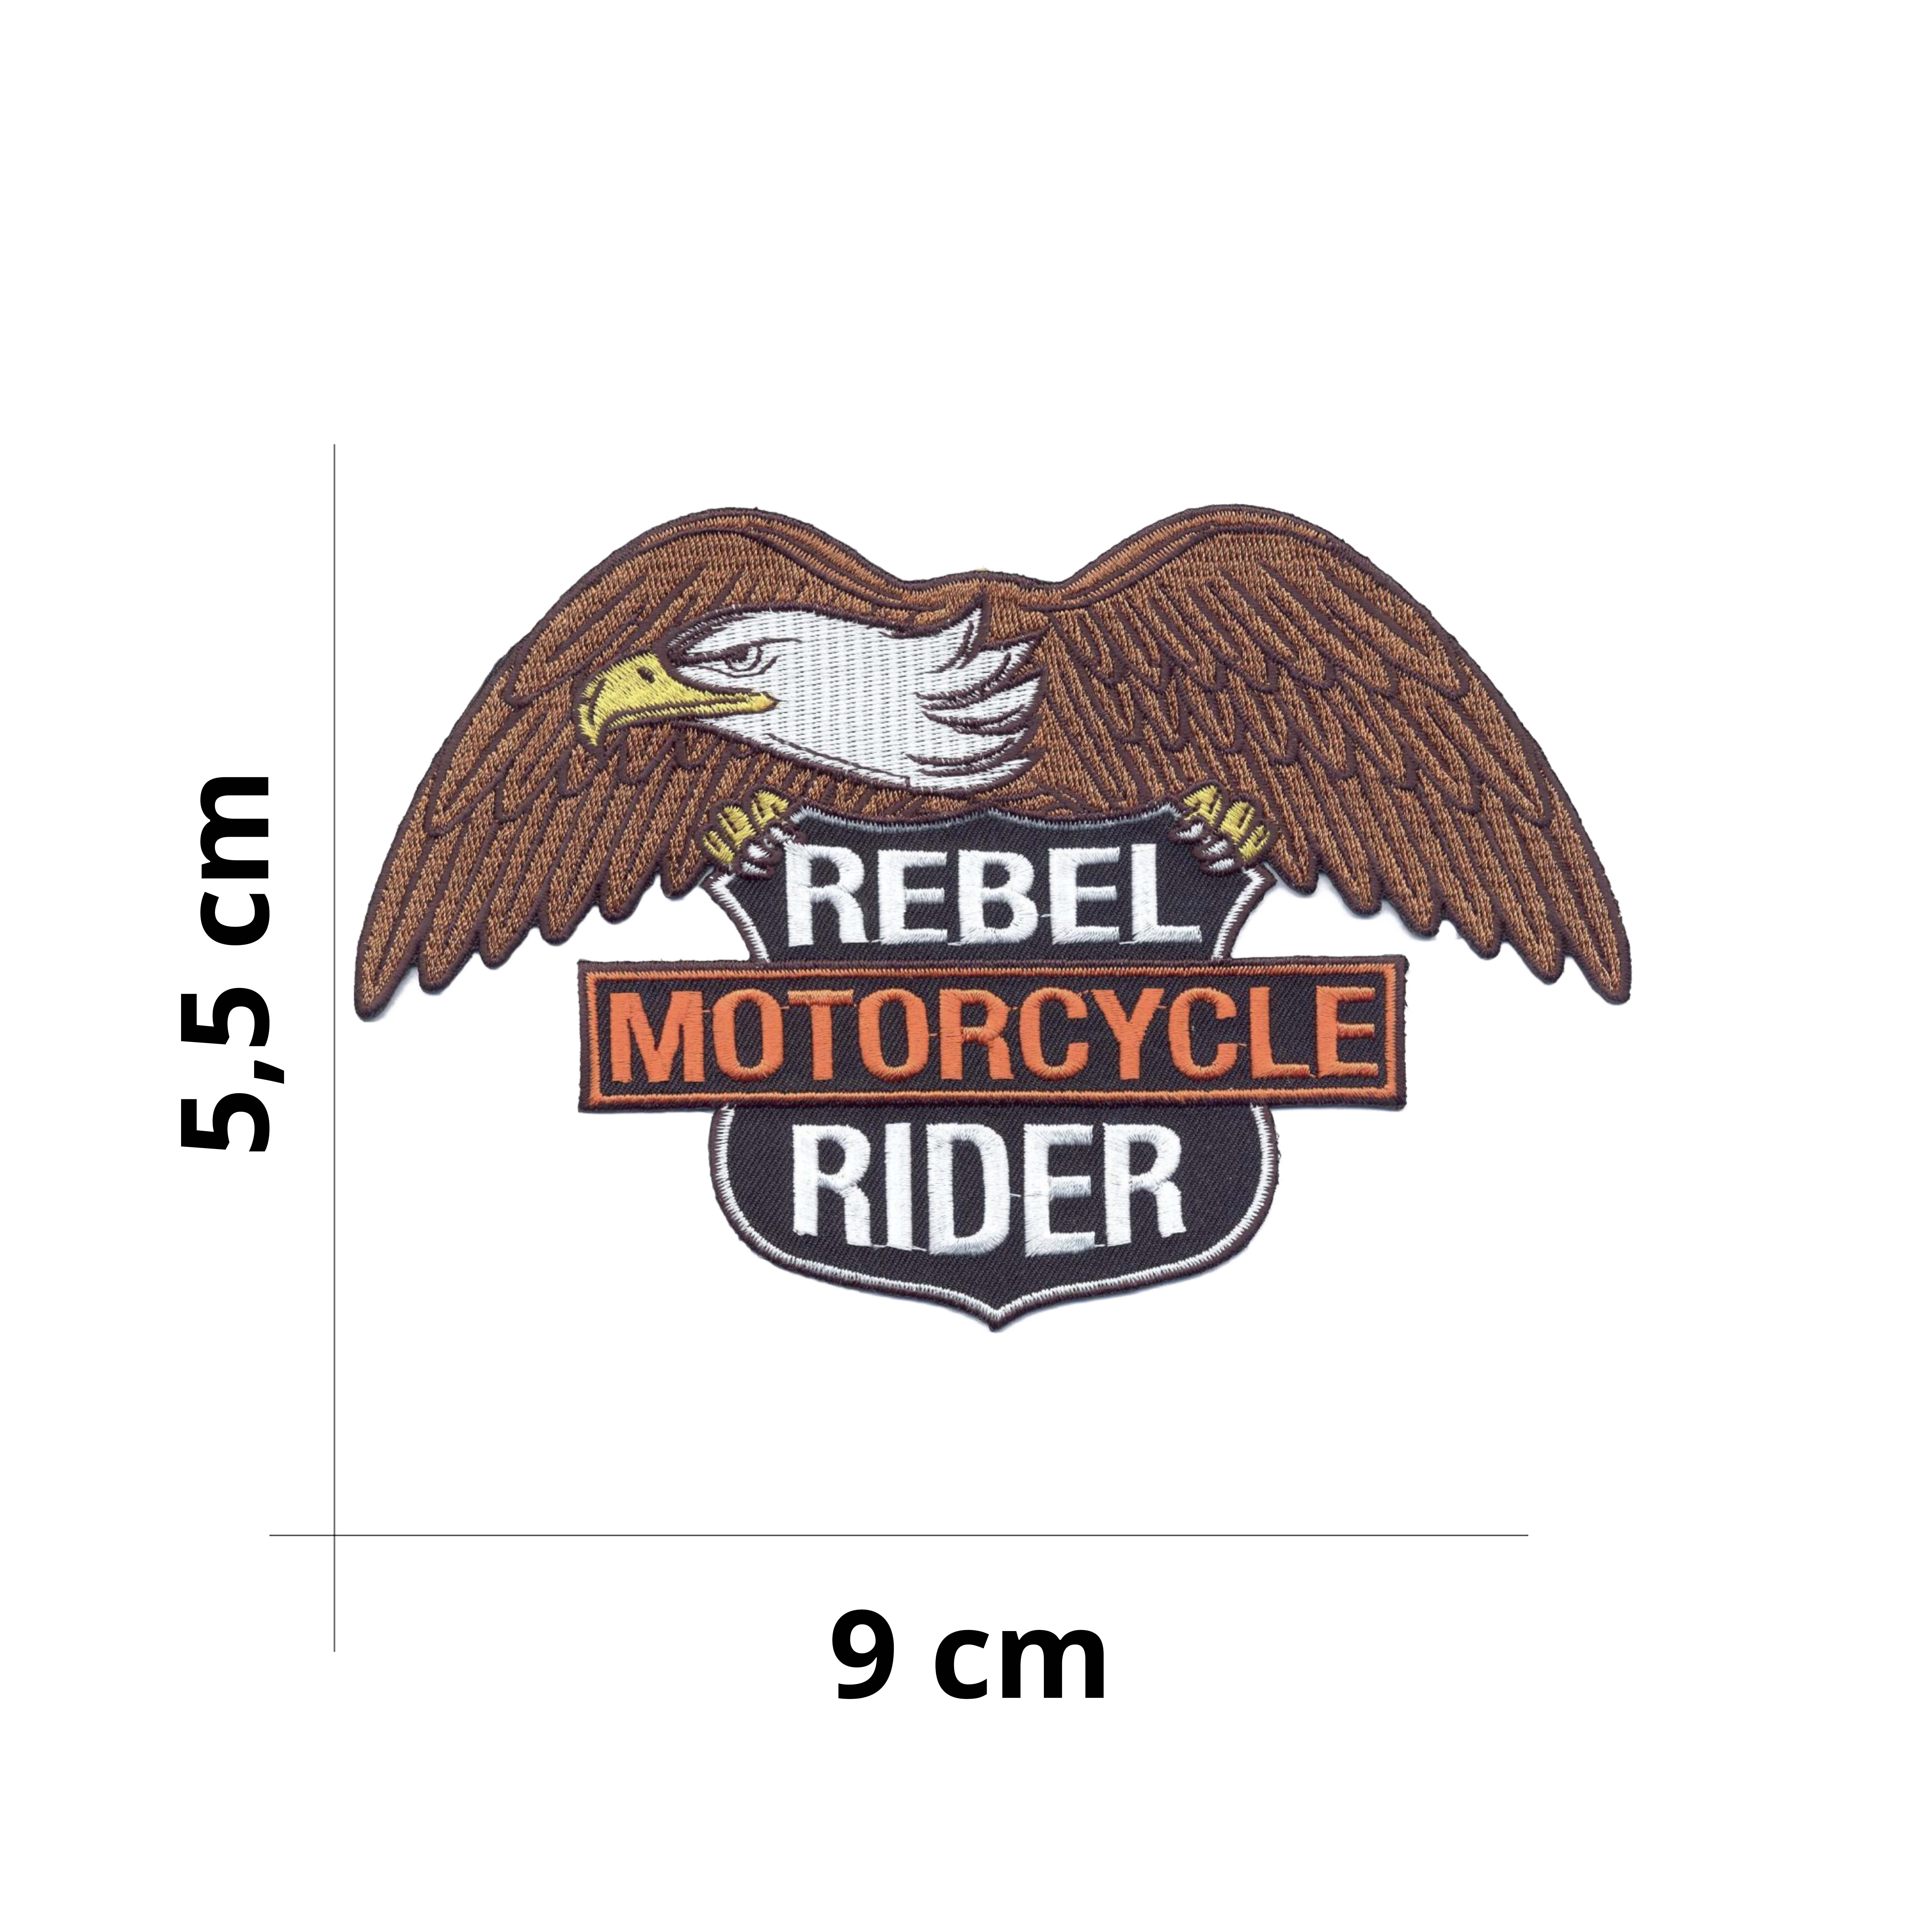 Applicazione Rebel Motorcycle Rider